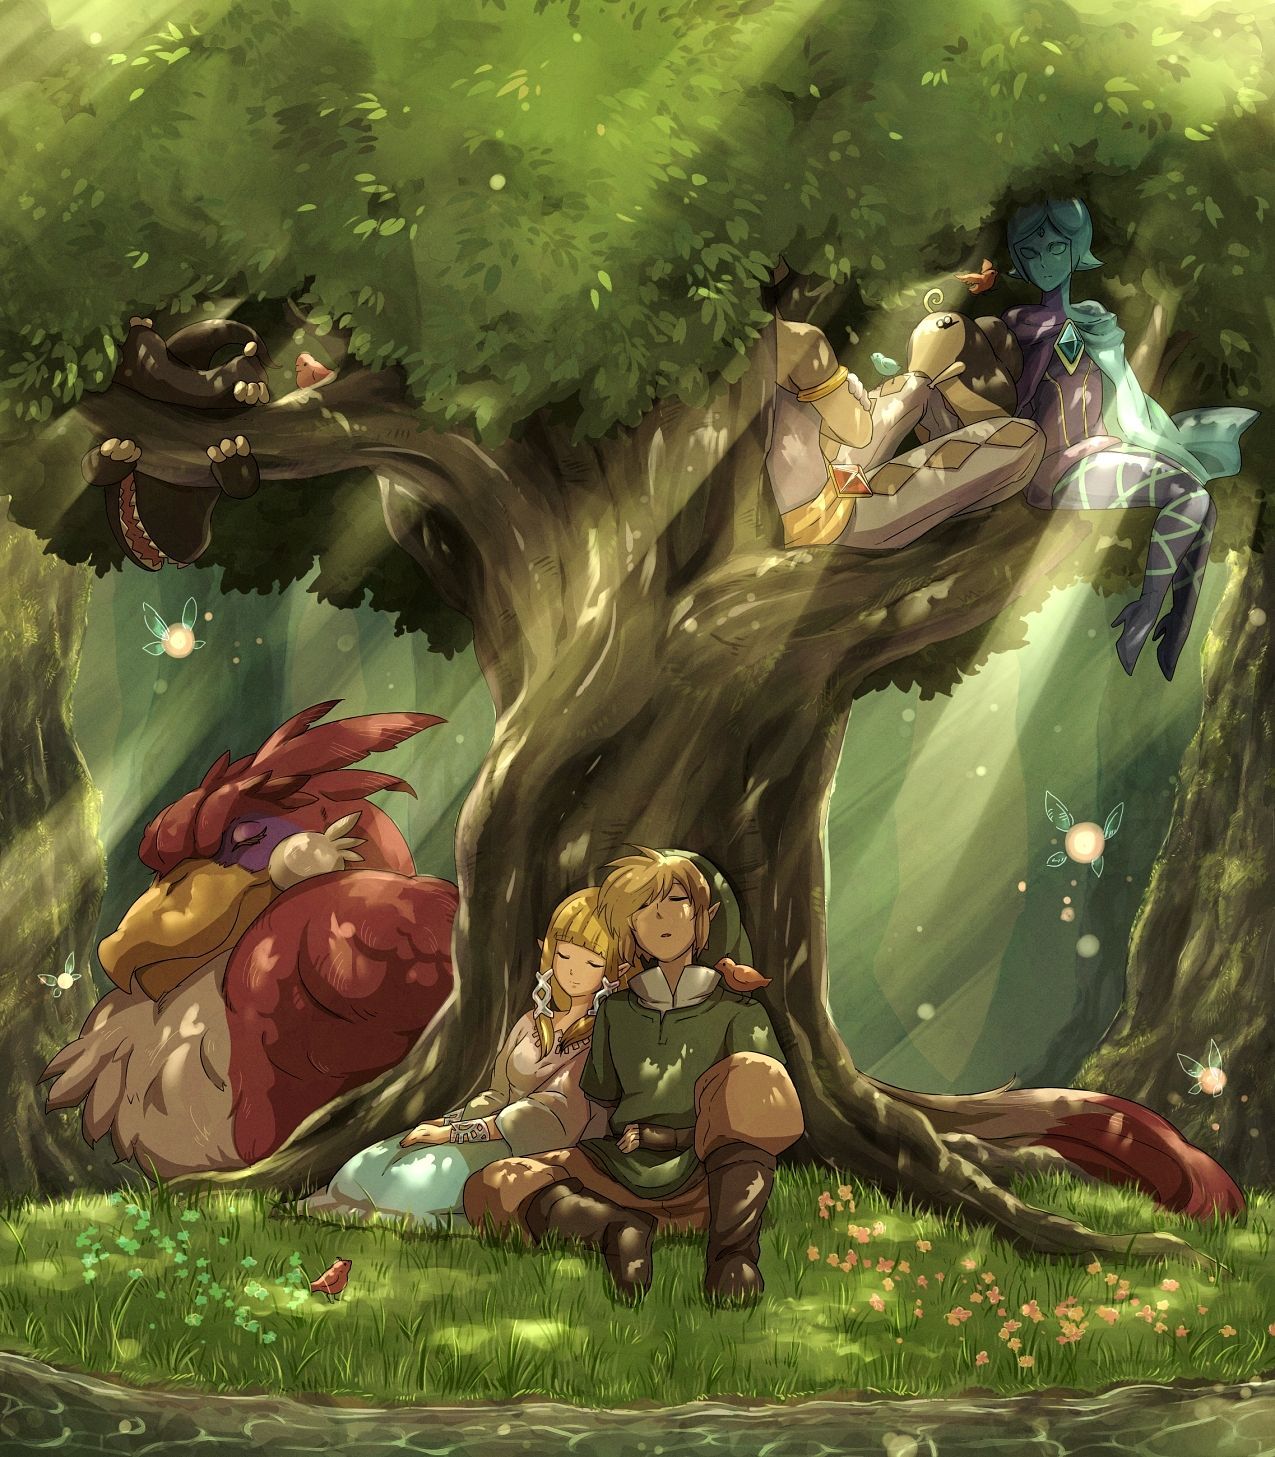 Zelda no Densetsu (The Legend Of Zelda) Anime Image Board